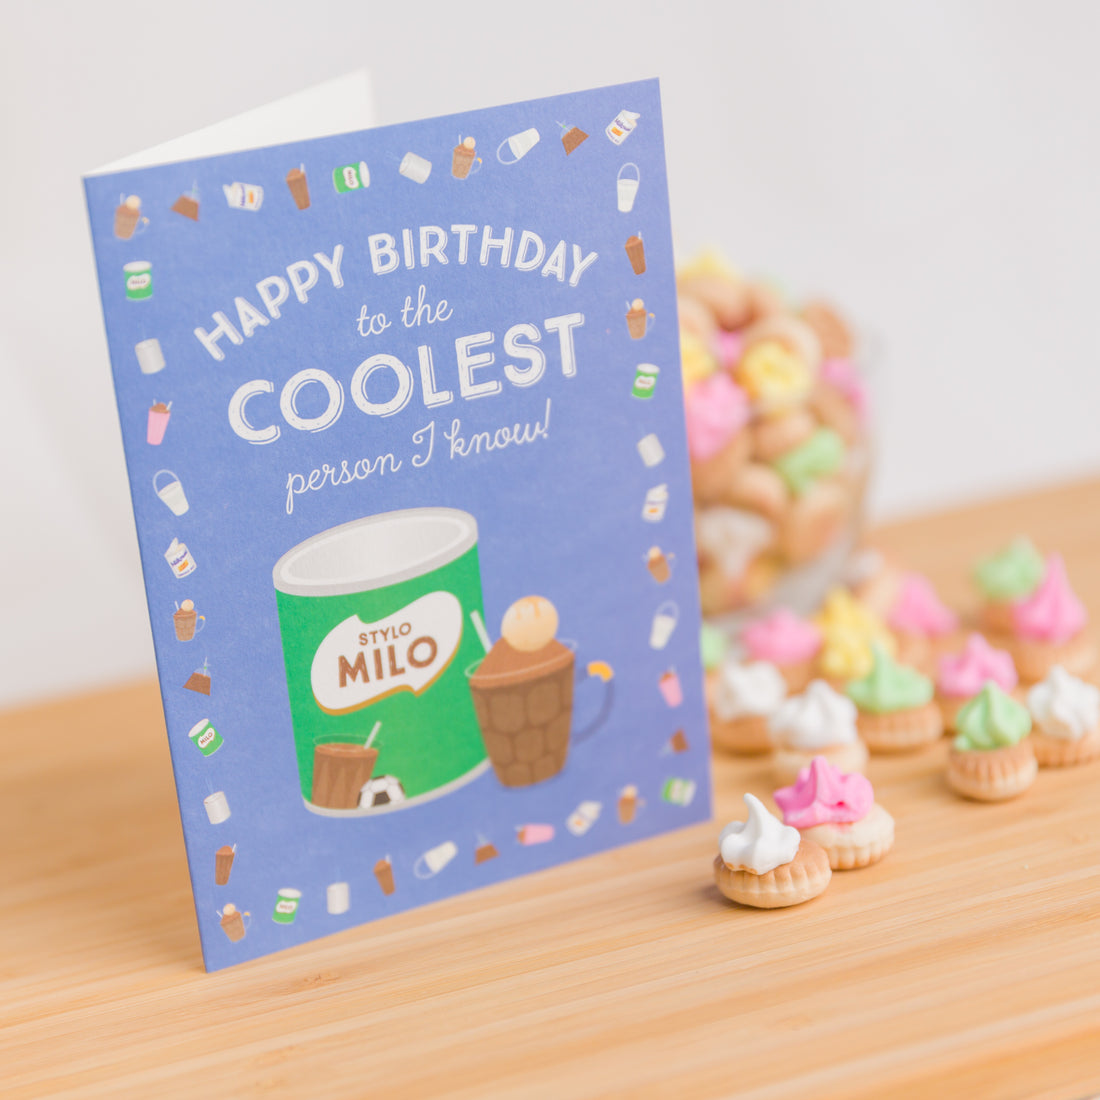 Stylo Milo Birthday Card